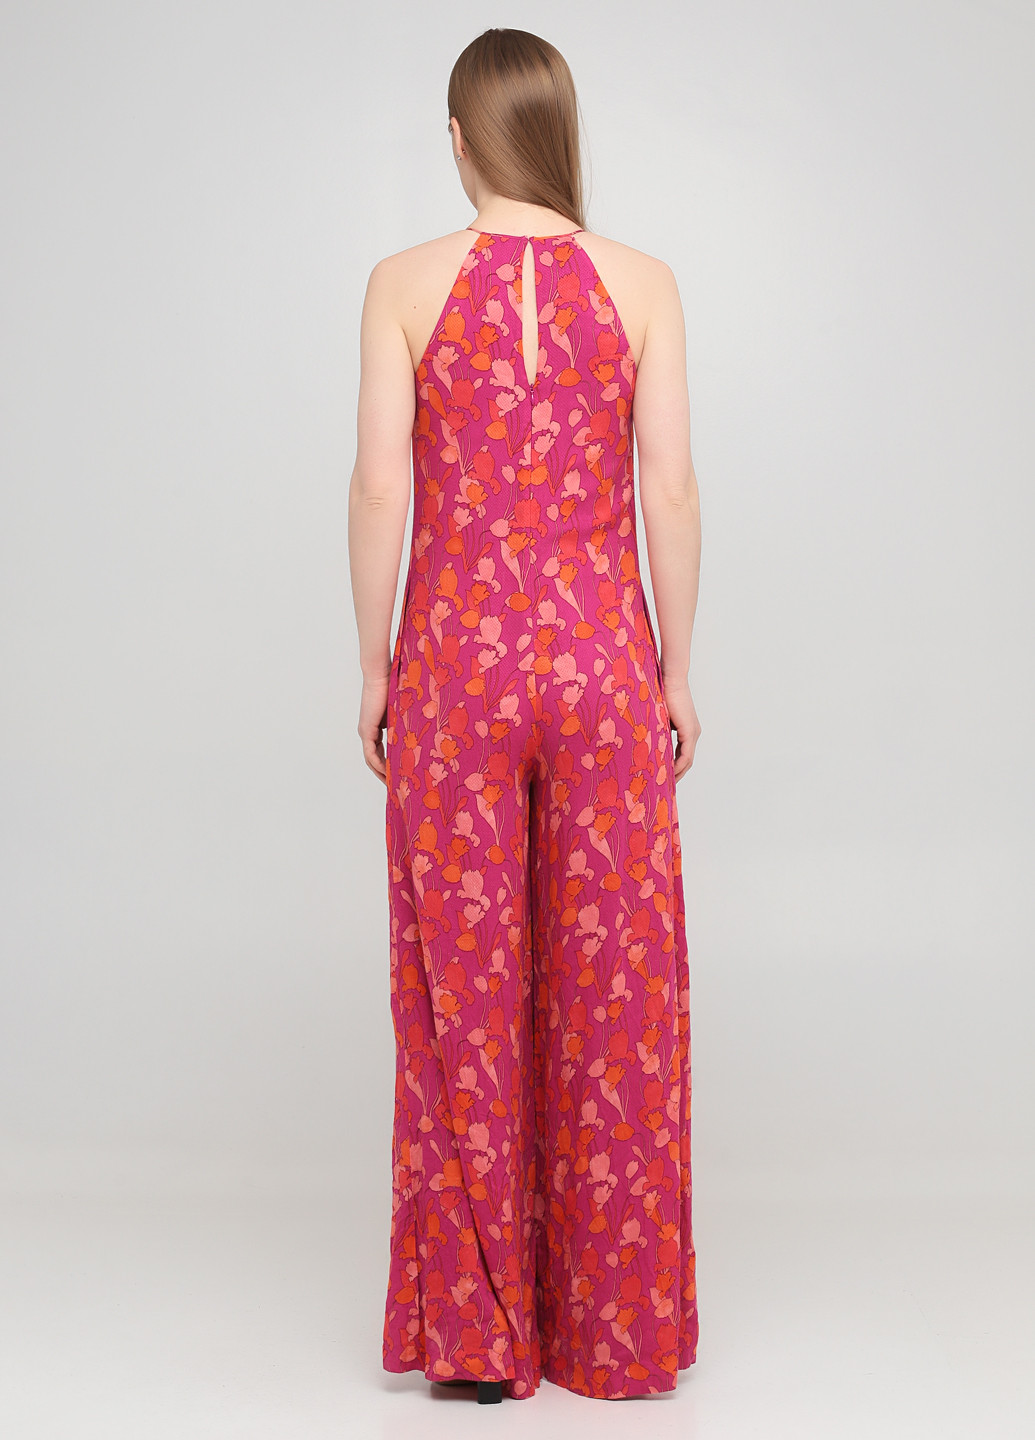 Комбинезон Massimo Dutti комбинезон-брюки цветочный малиновый кэжуал вискоза